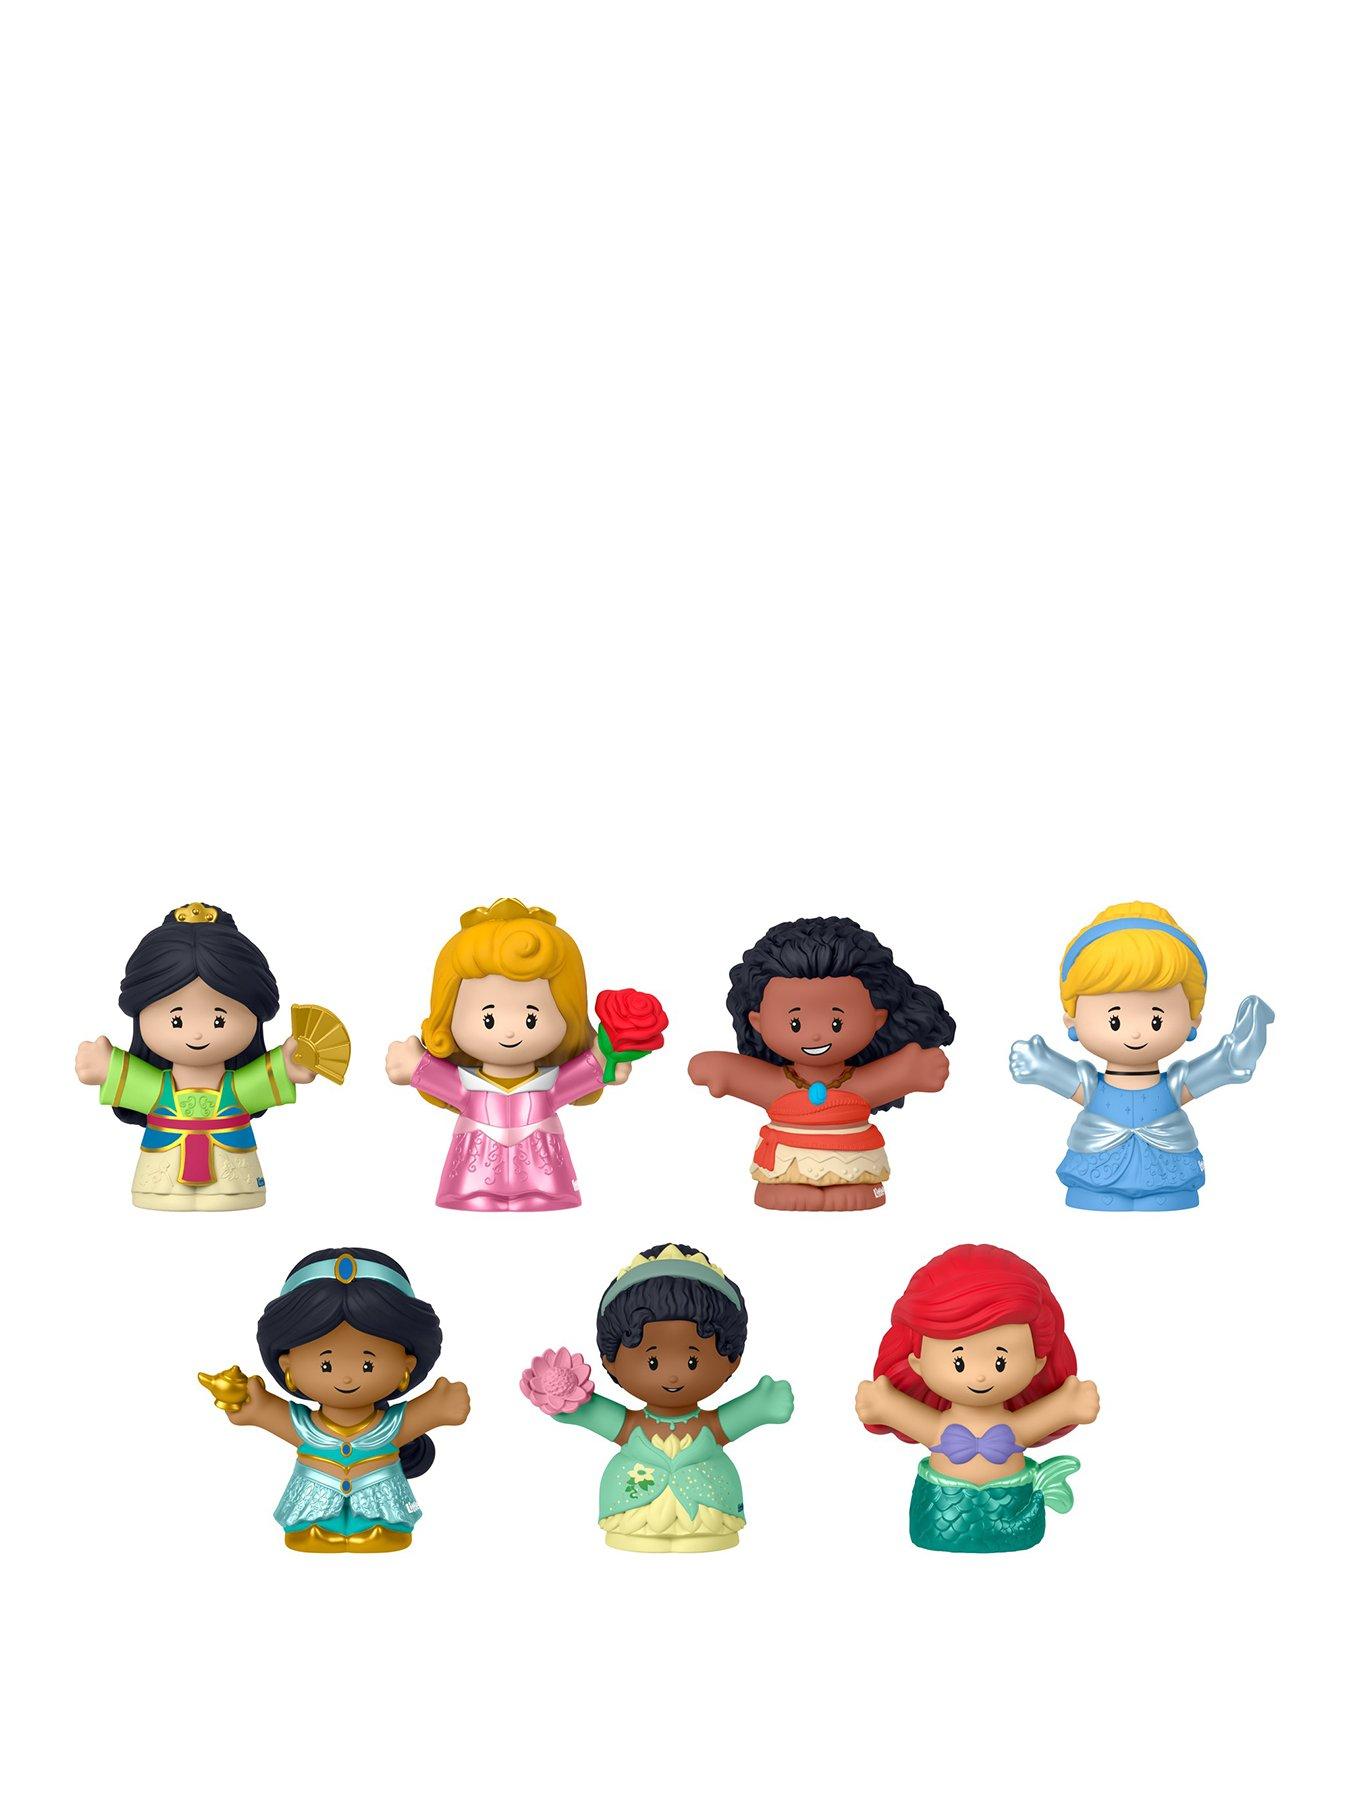 Disney Princess Rapunzel and Friends by Little People 